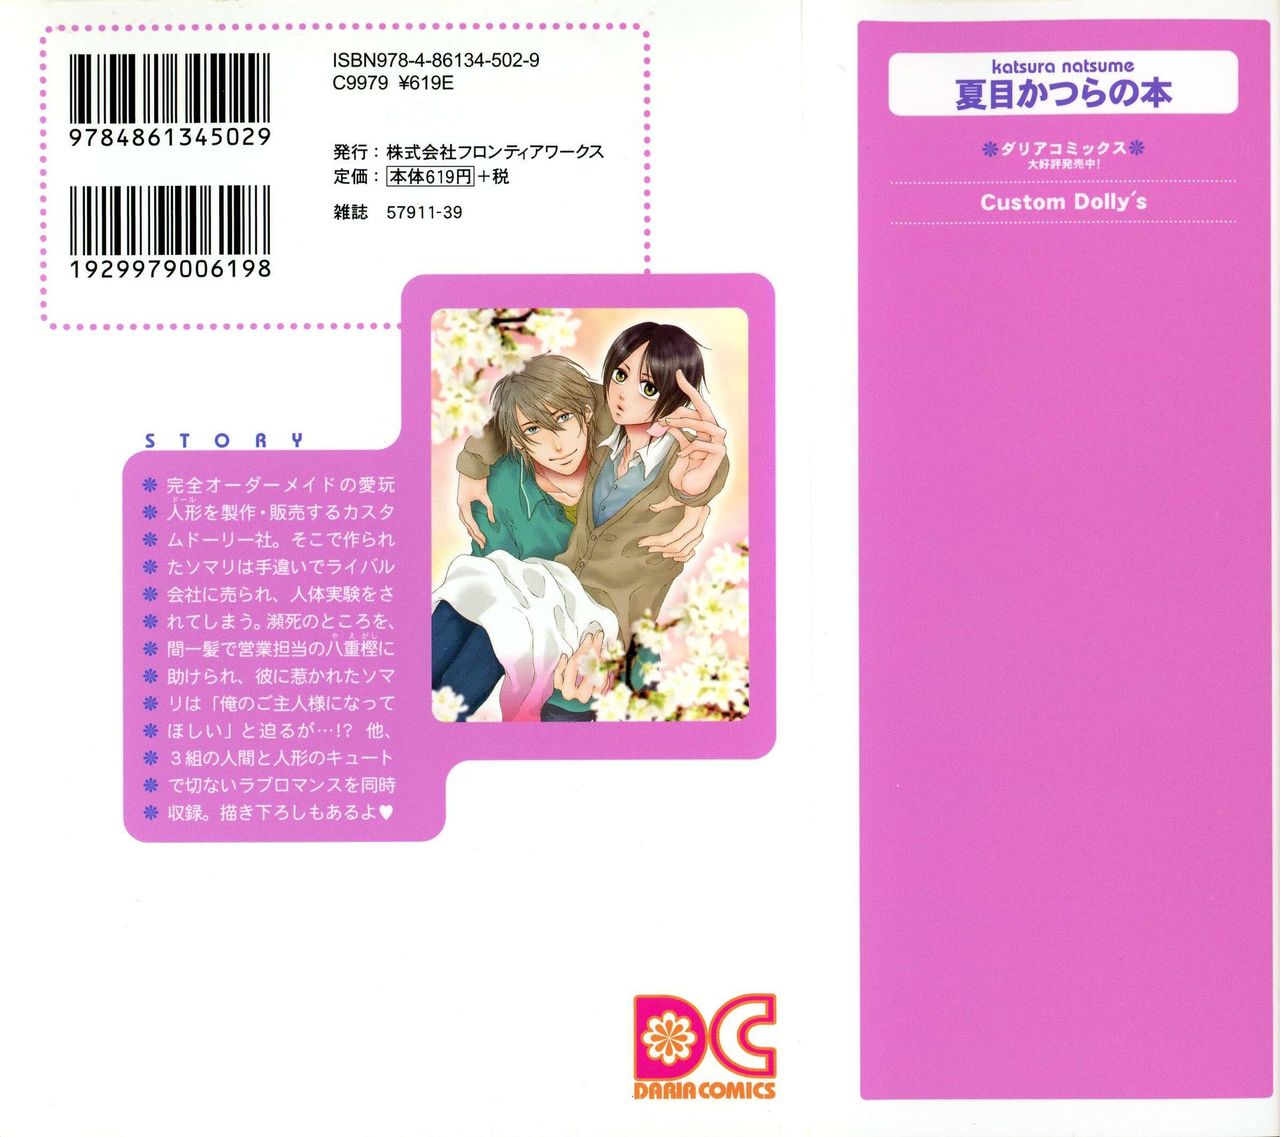 [Natsume Katsura] Custom Dolly's [夏目かつら] Custom Dolly's カスタムドリーズ